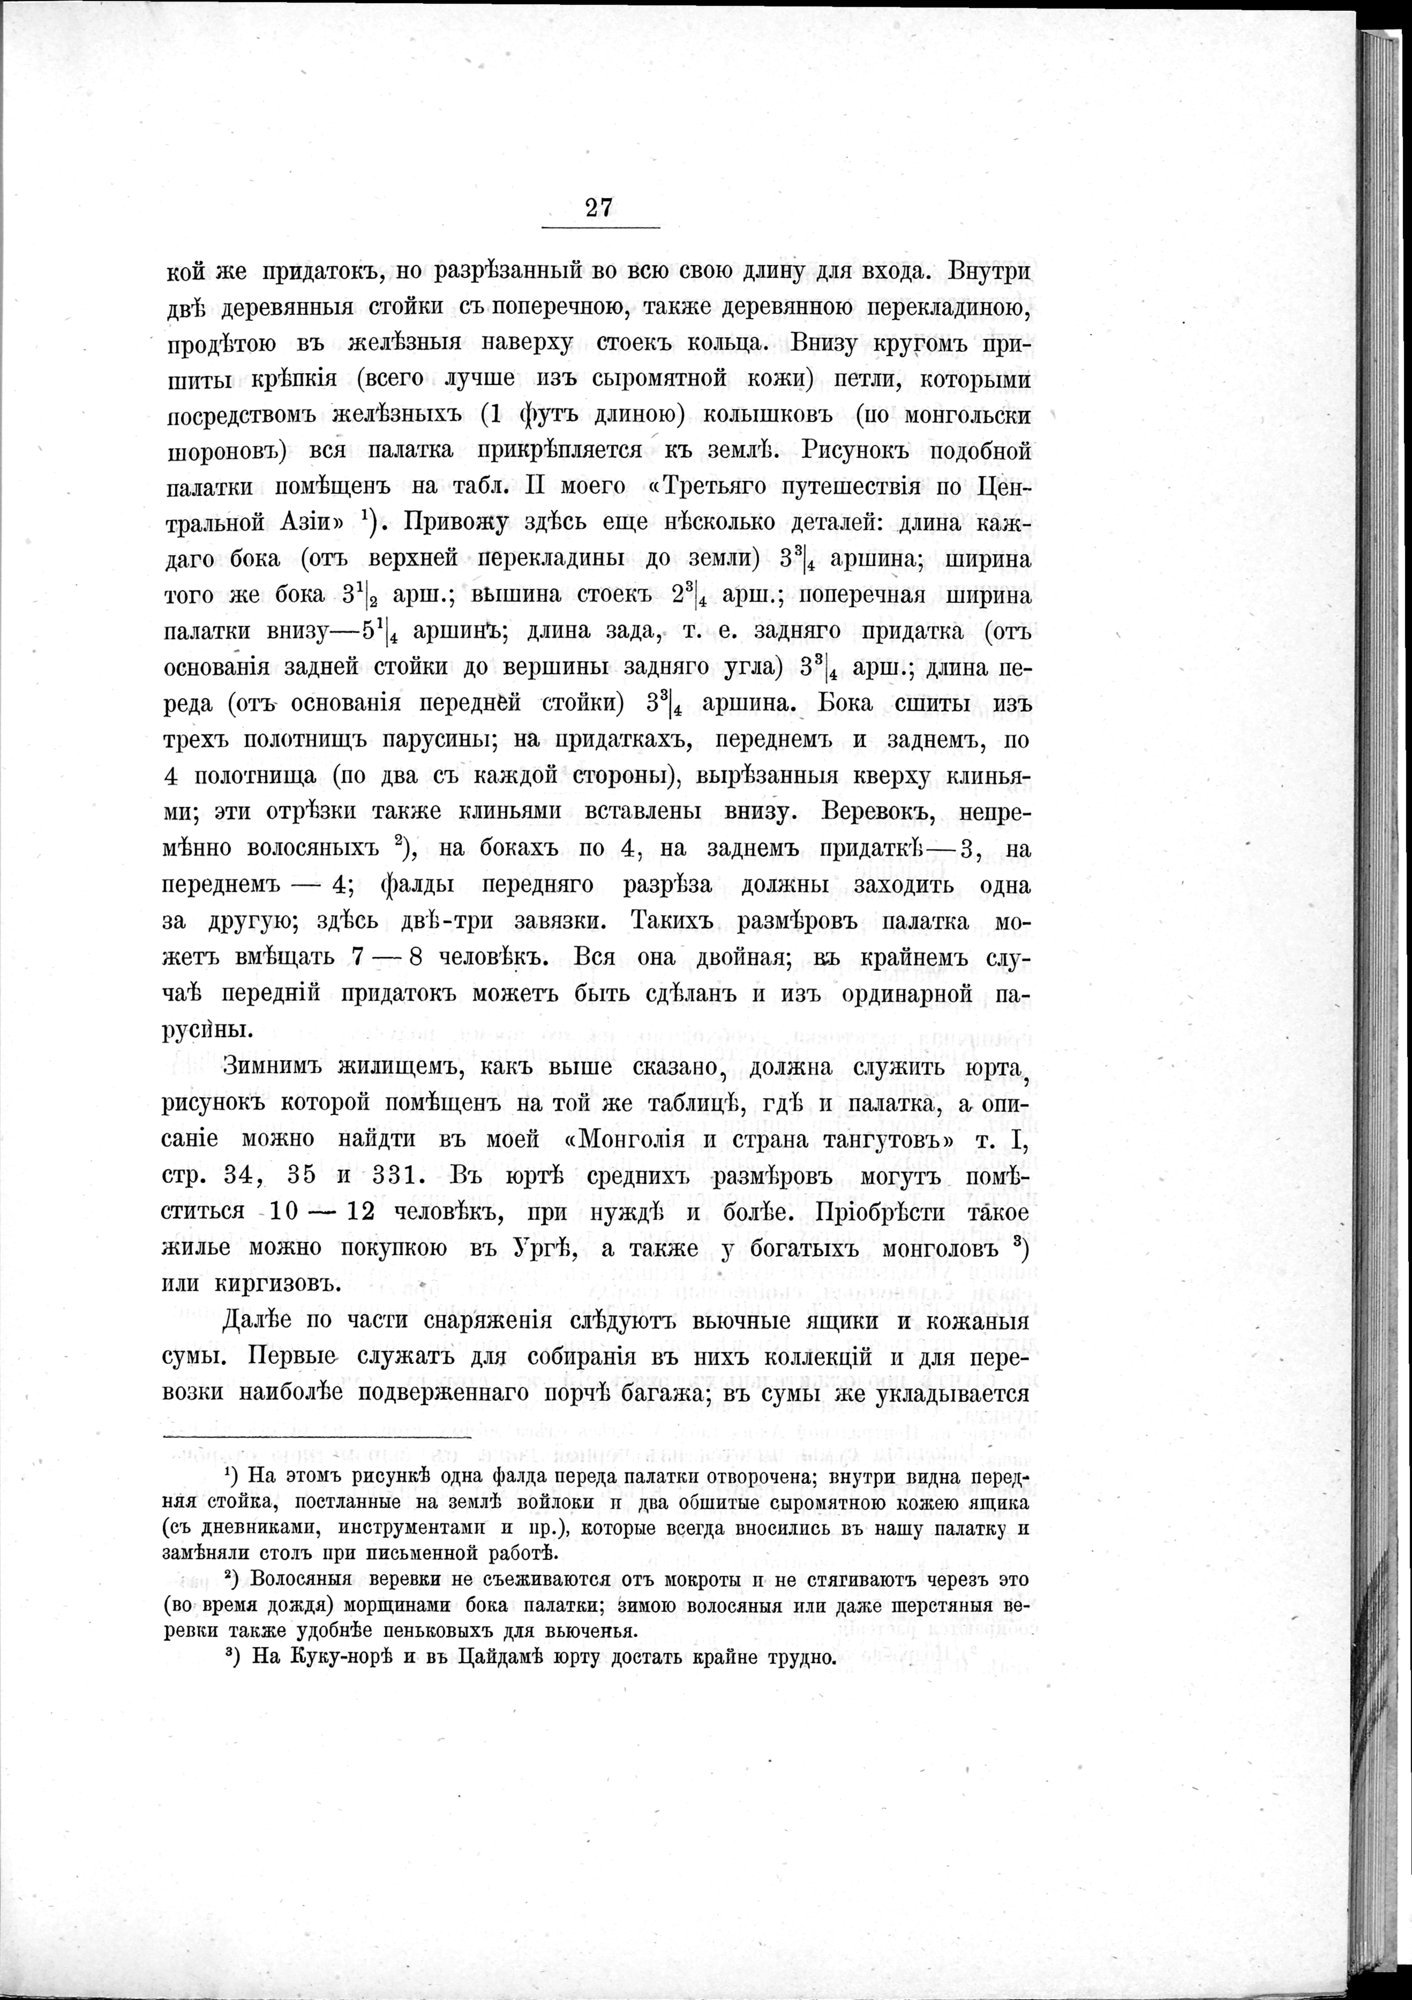 Ot Kiakhty na Istoki Zheltoi Rieki : vol.1 / Page 49 (Grayscale High Resolution Image)